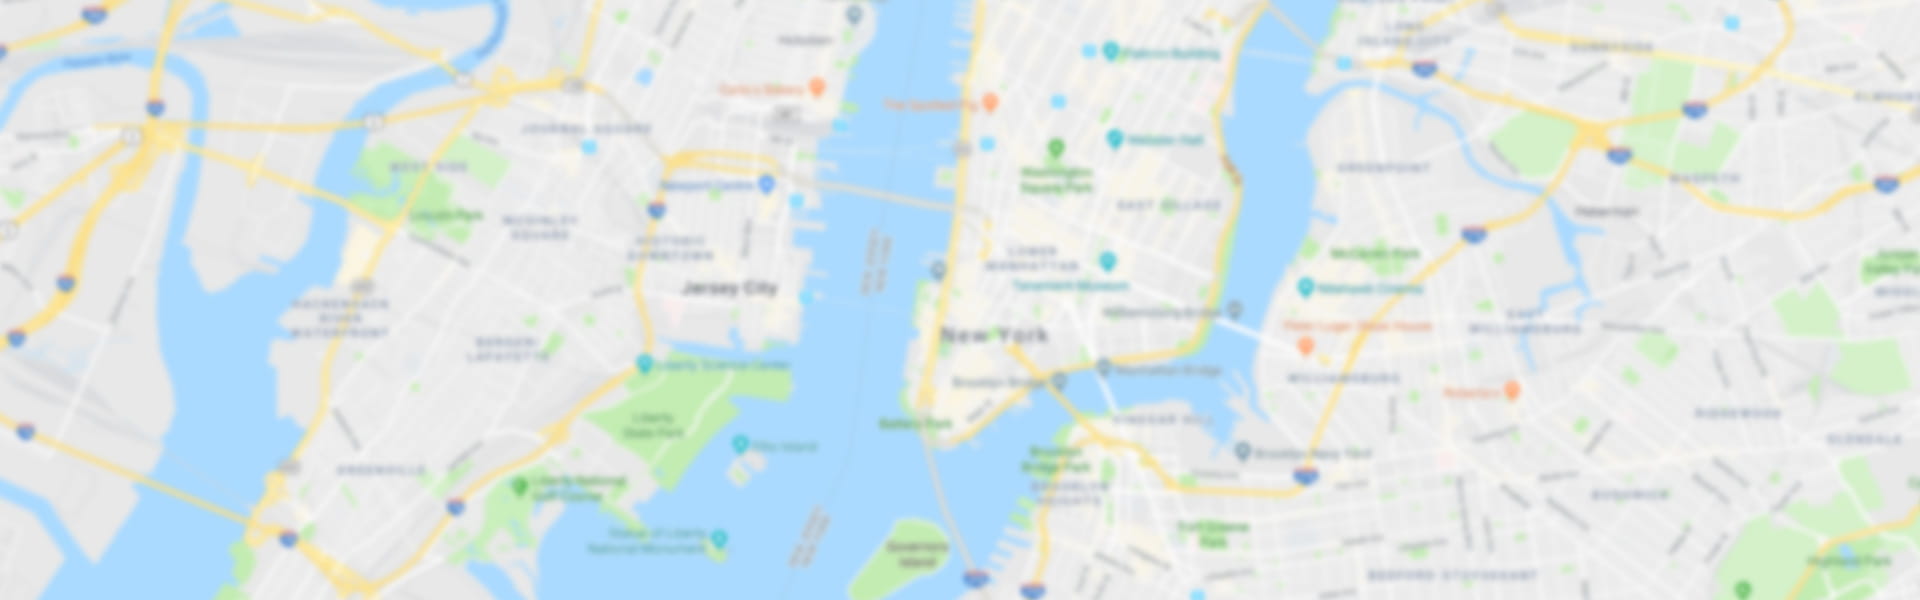 google map placeholder - فروشگاه ویکی صنعت